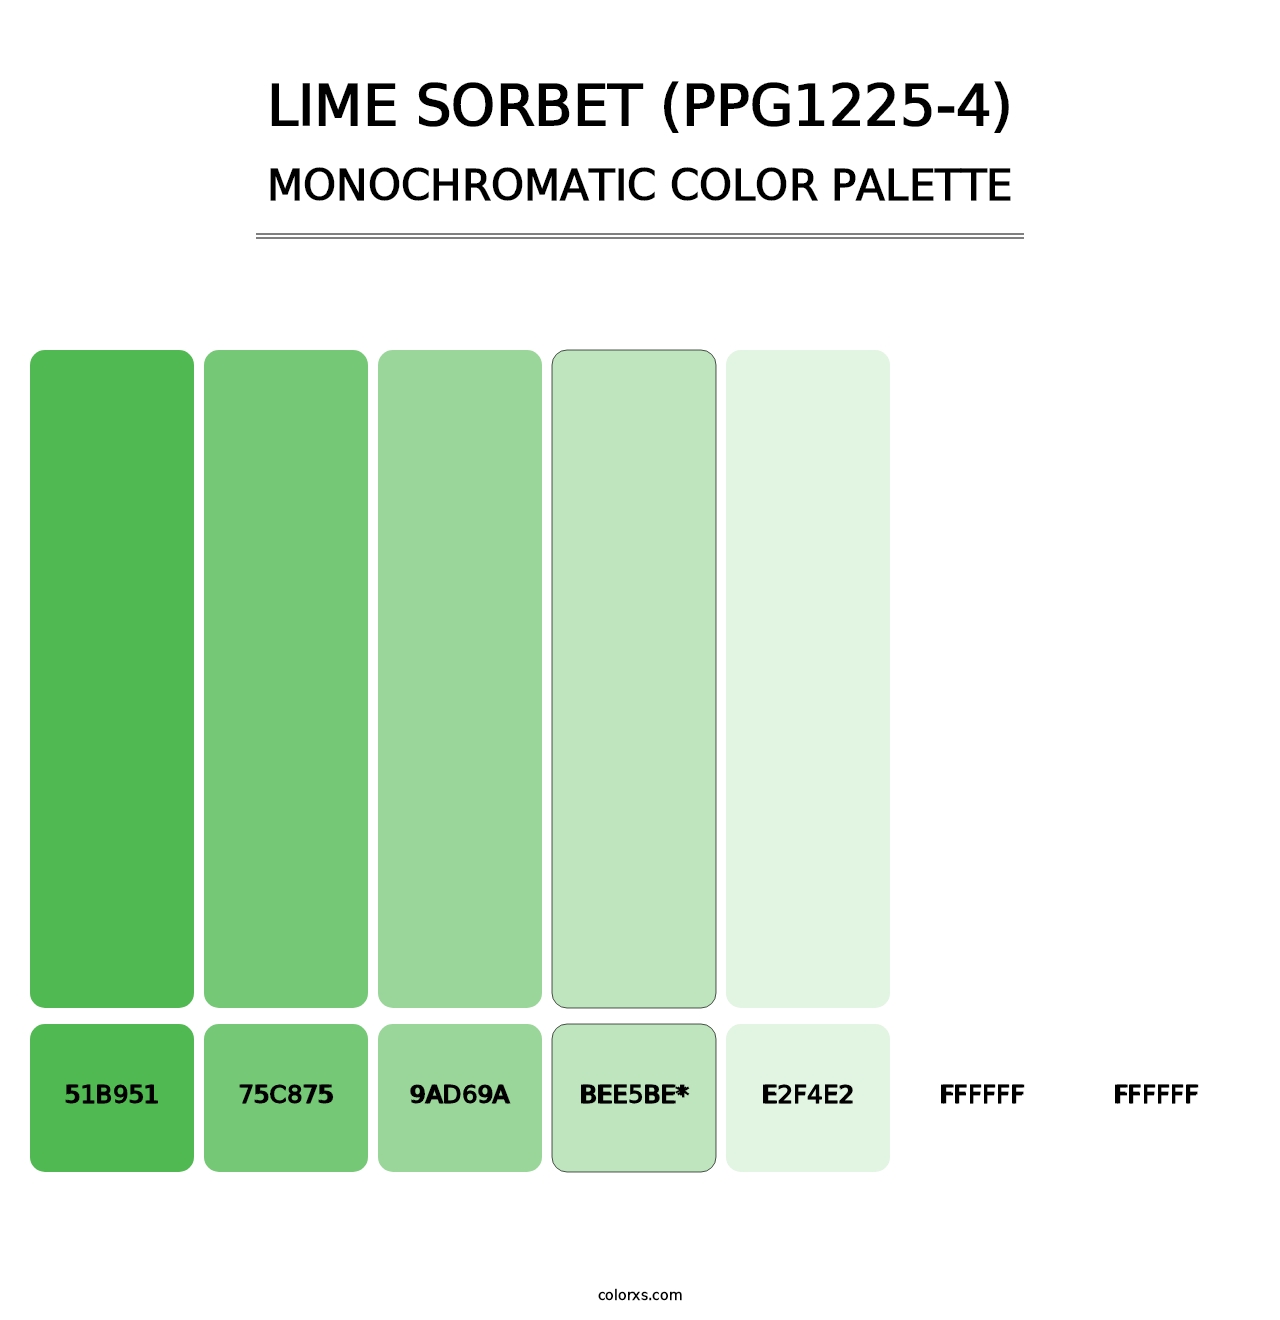 Lime Sorbet (PPG1225-4) - Monochromatic Color Palette